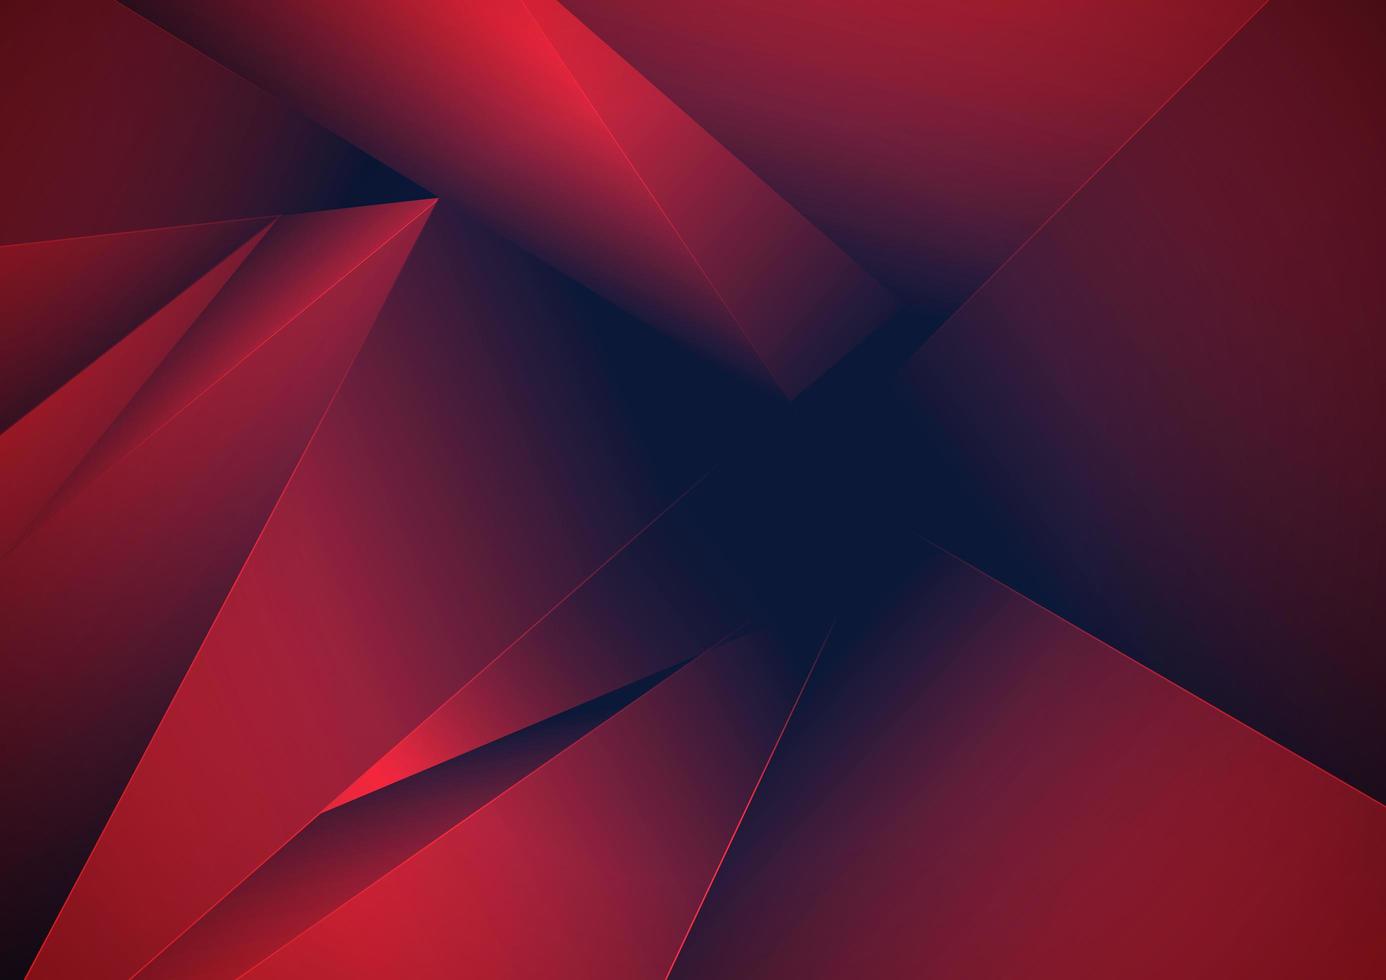 cor gradiente vermelho abstrato baixo polígono na textura de fundo do triângulo. vetor